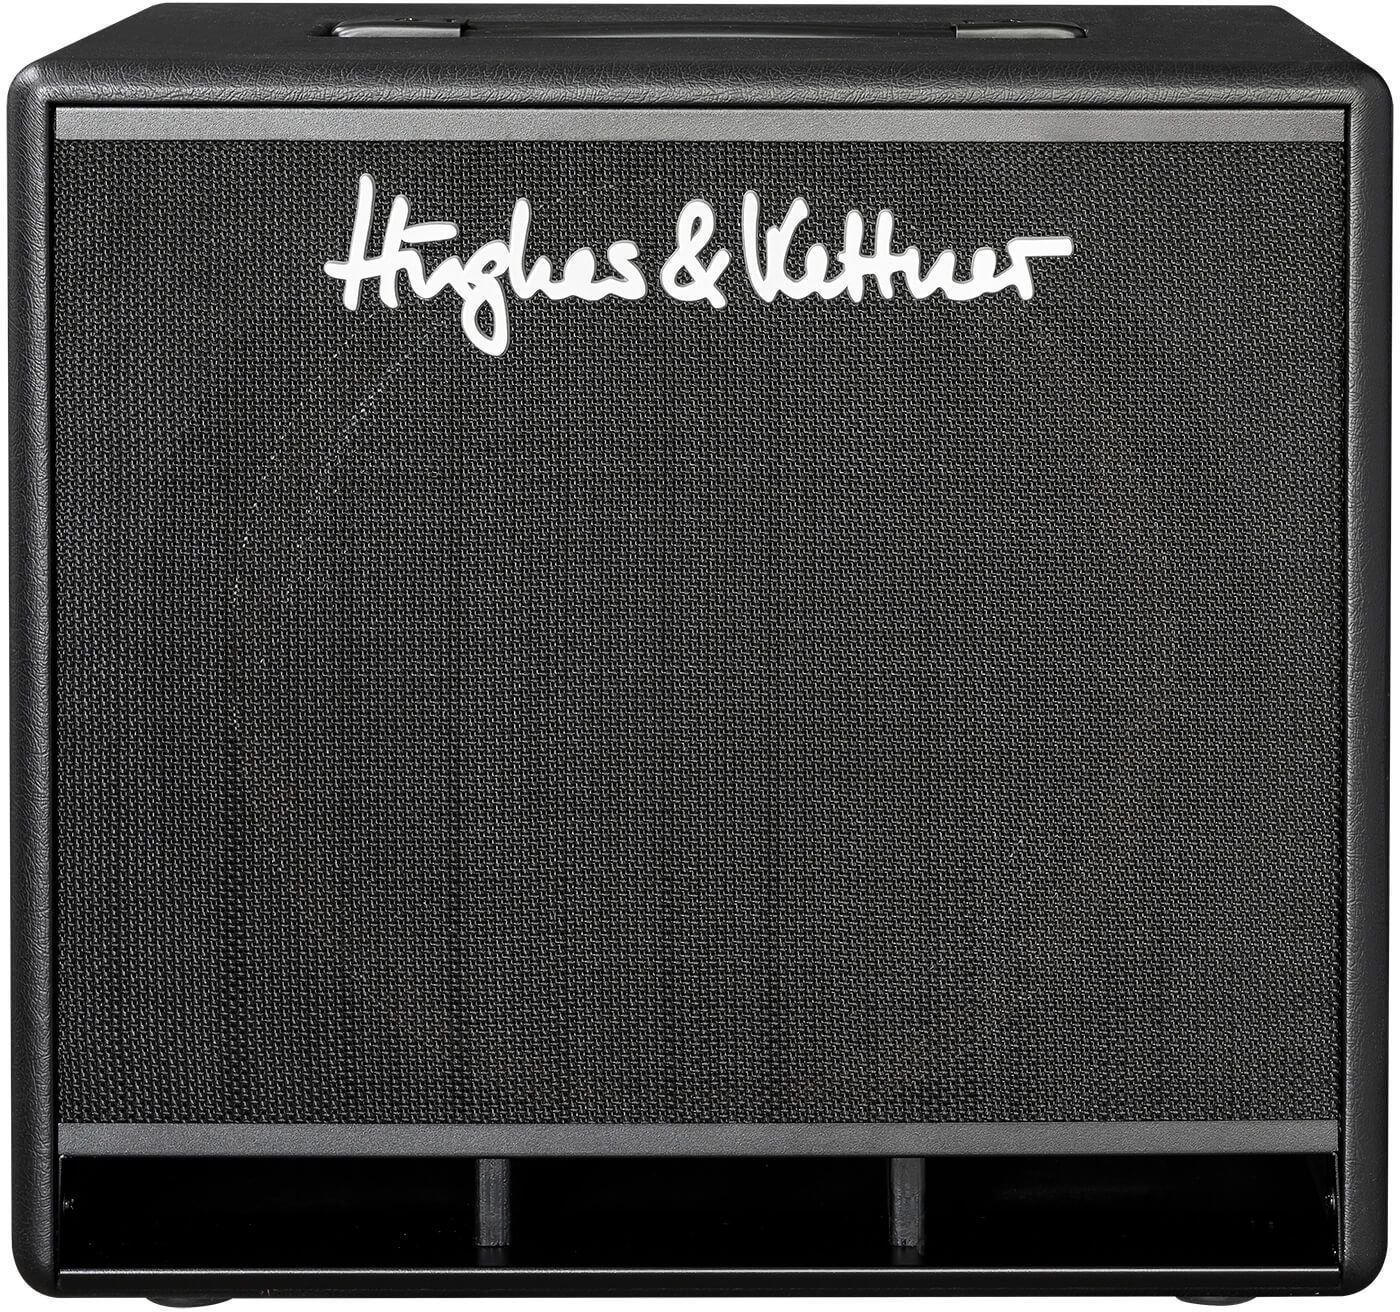 Gitarren-Lautsprecher Hughes & Kettner TS 112 Pro